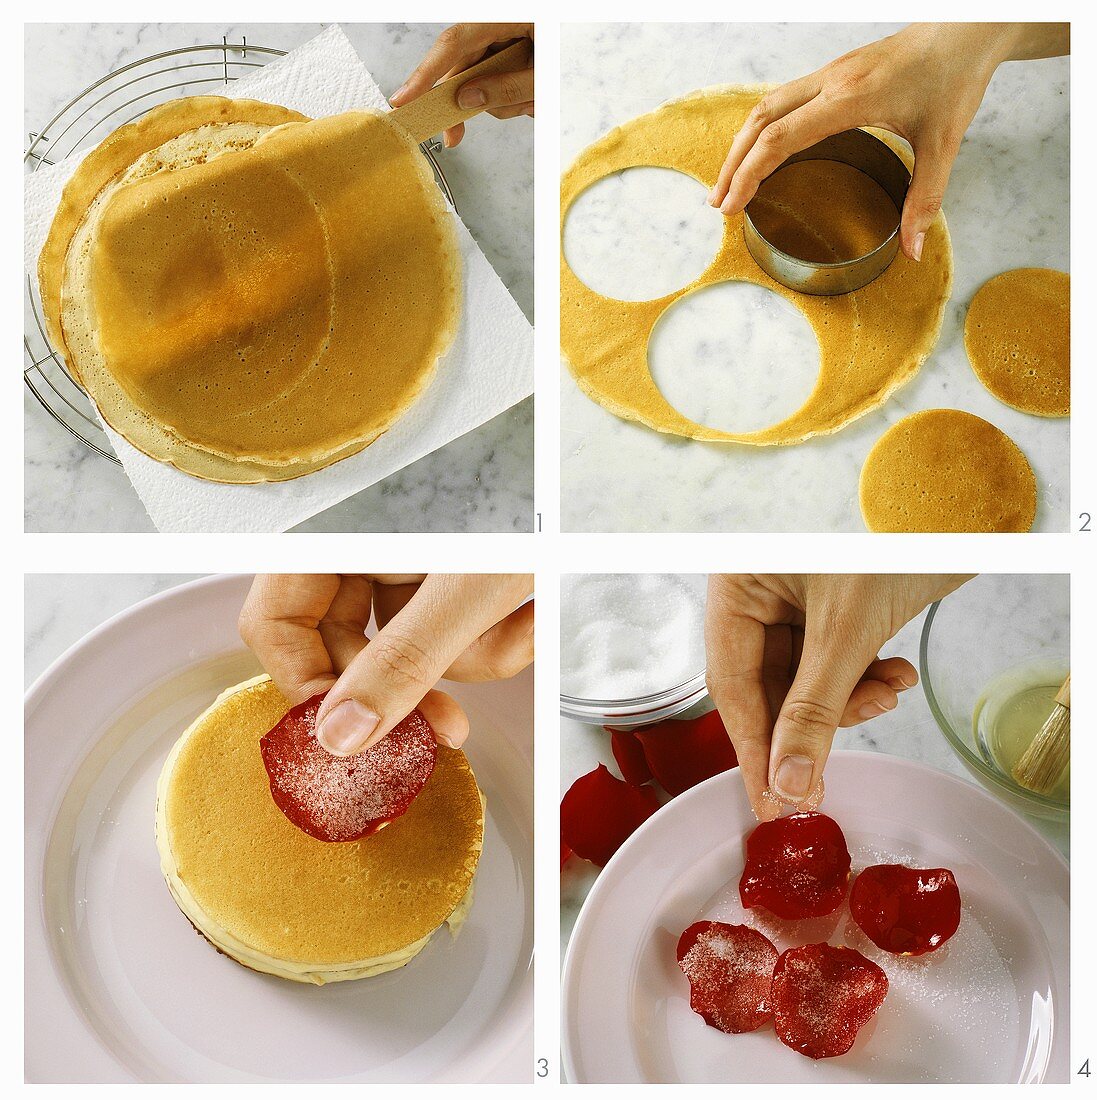 Making Palatschinken (crepe) cakes with rose petals